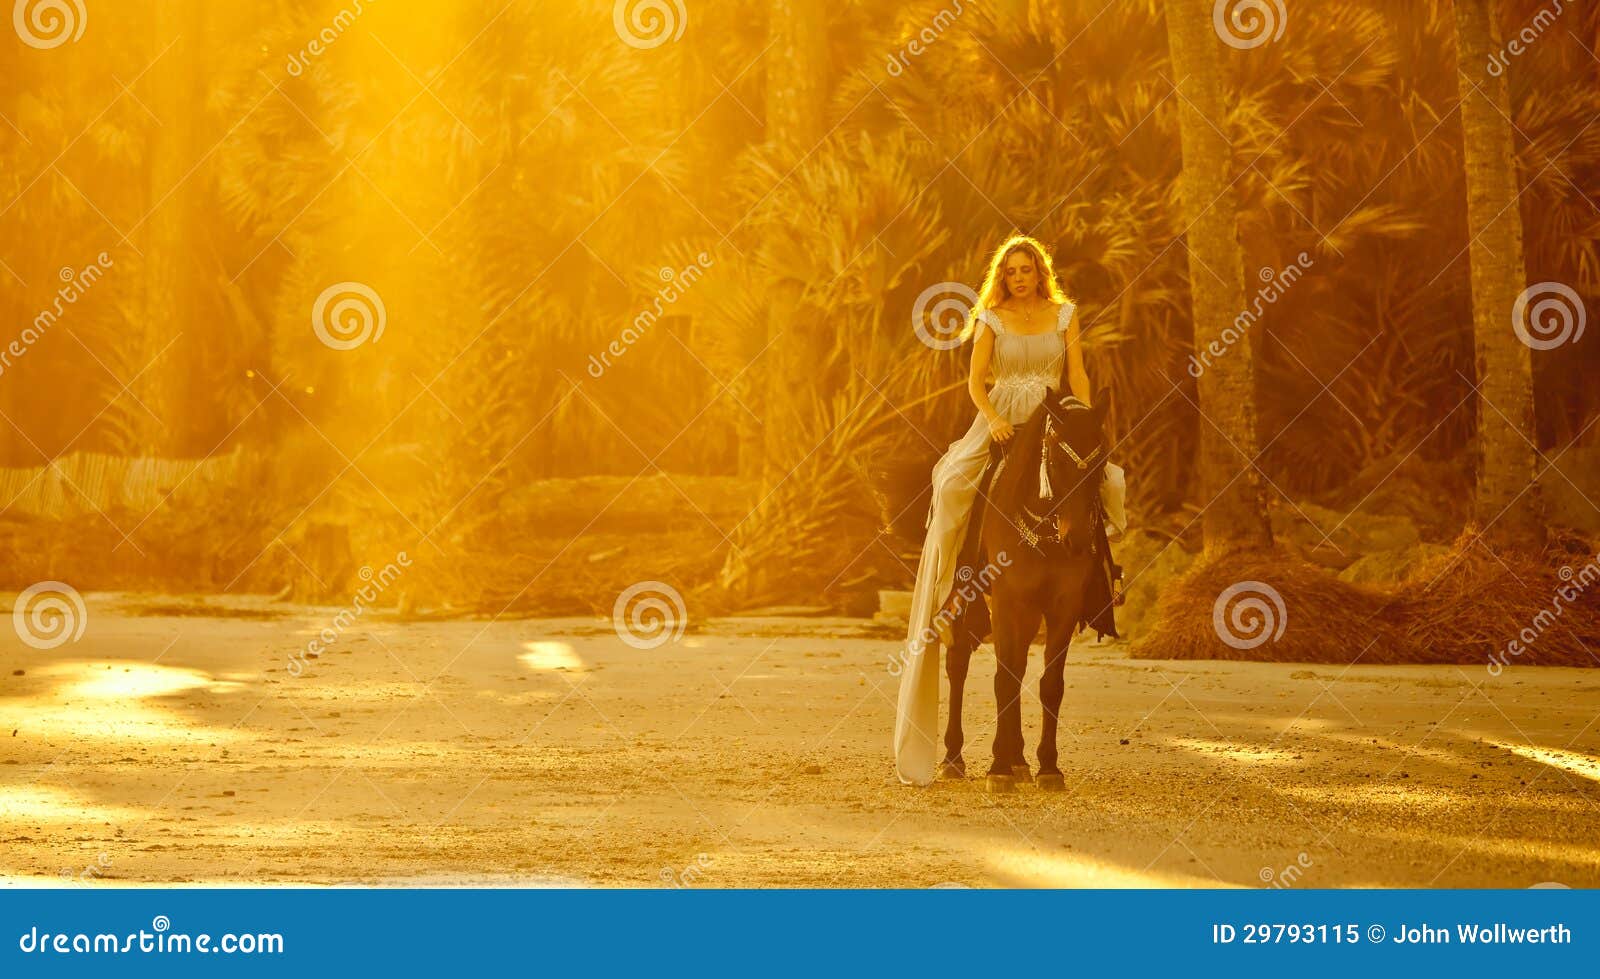 medieval woman on horseback